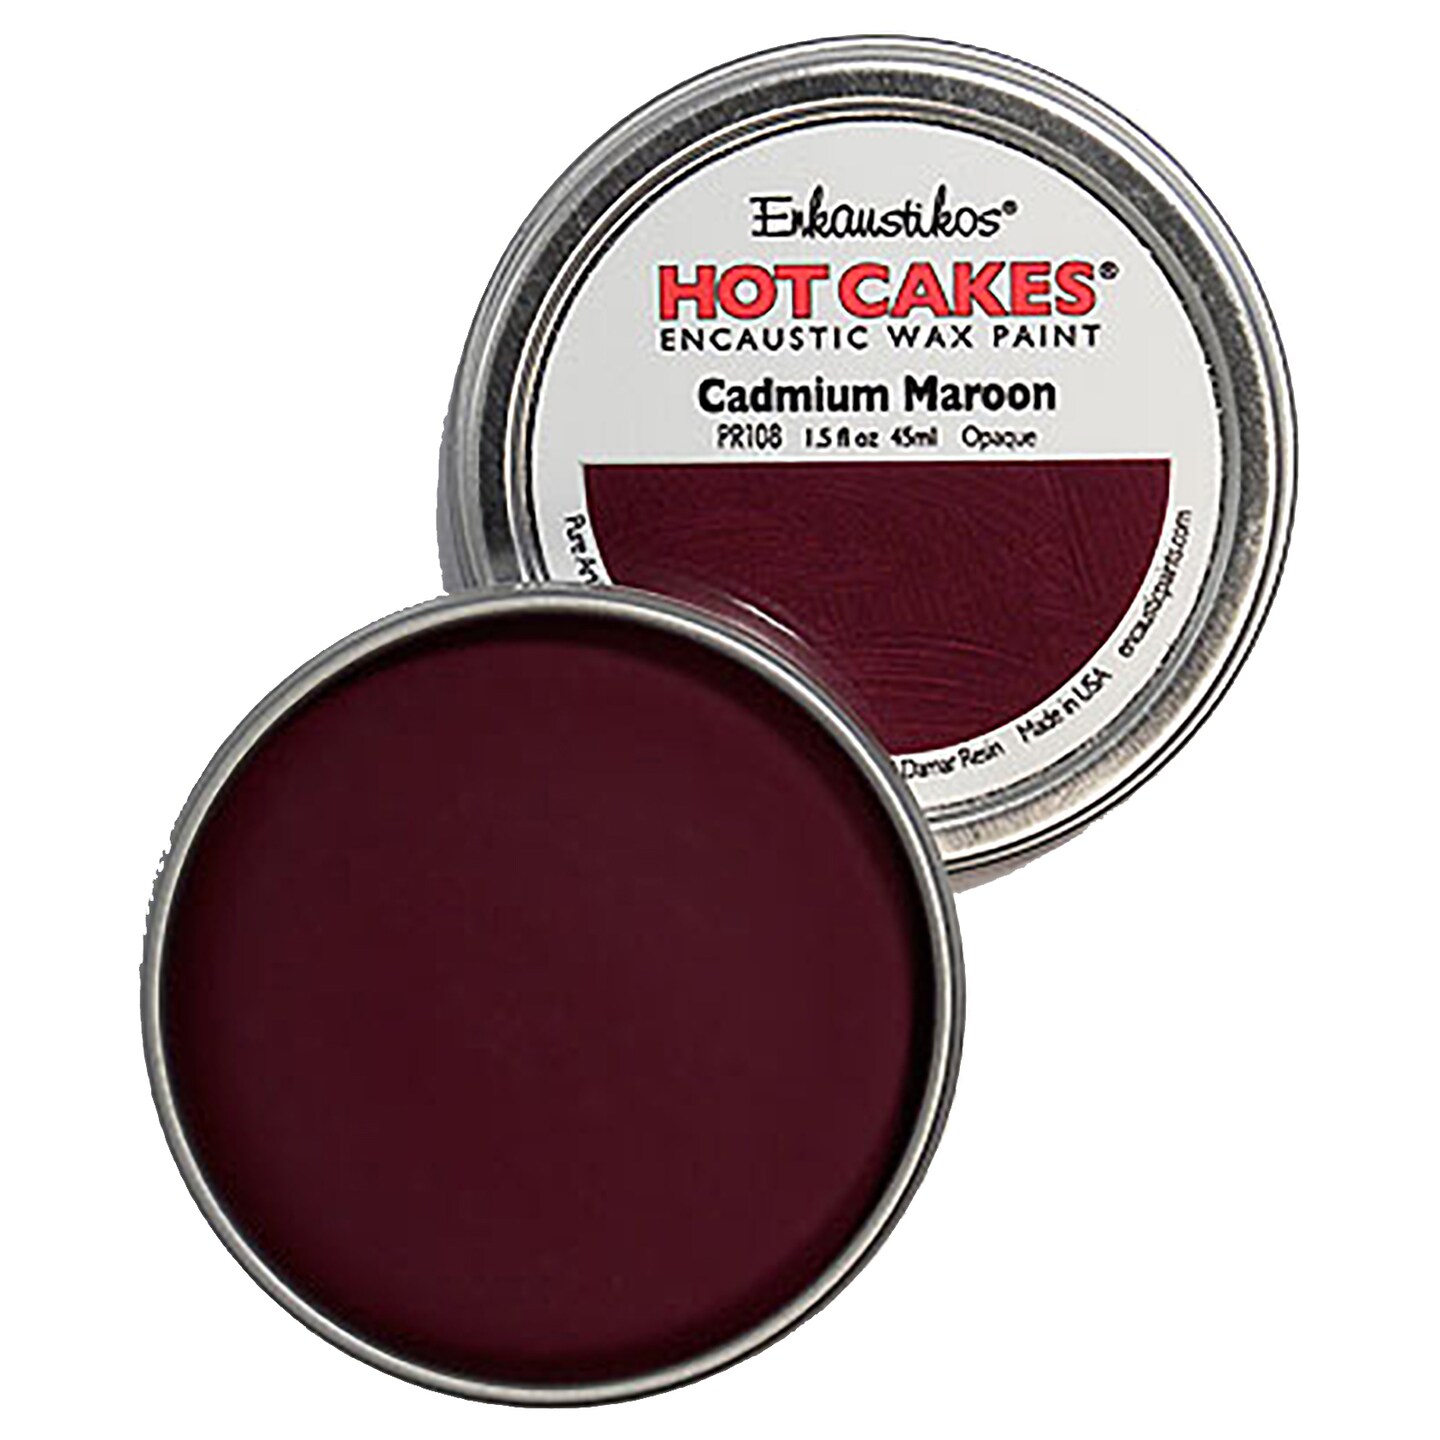 Enkaustikos Hot Cake Encaustic Wax Paint, 1.5 oz. Tin, Cadmium Maroon